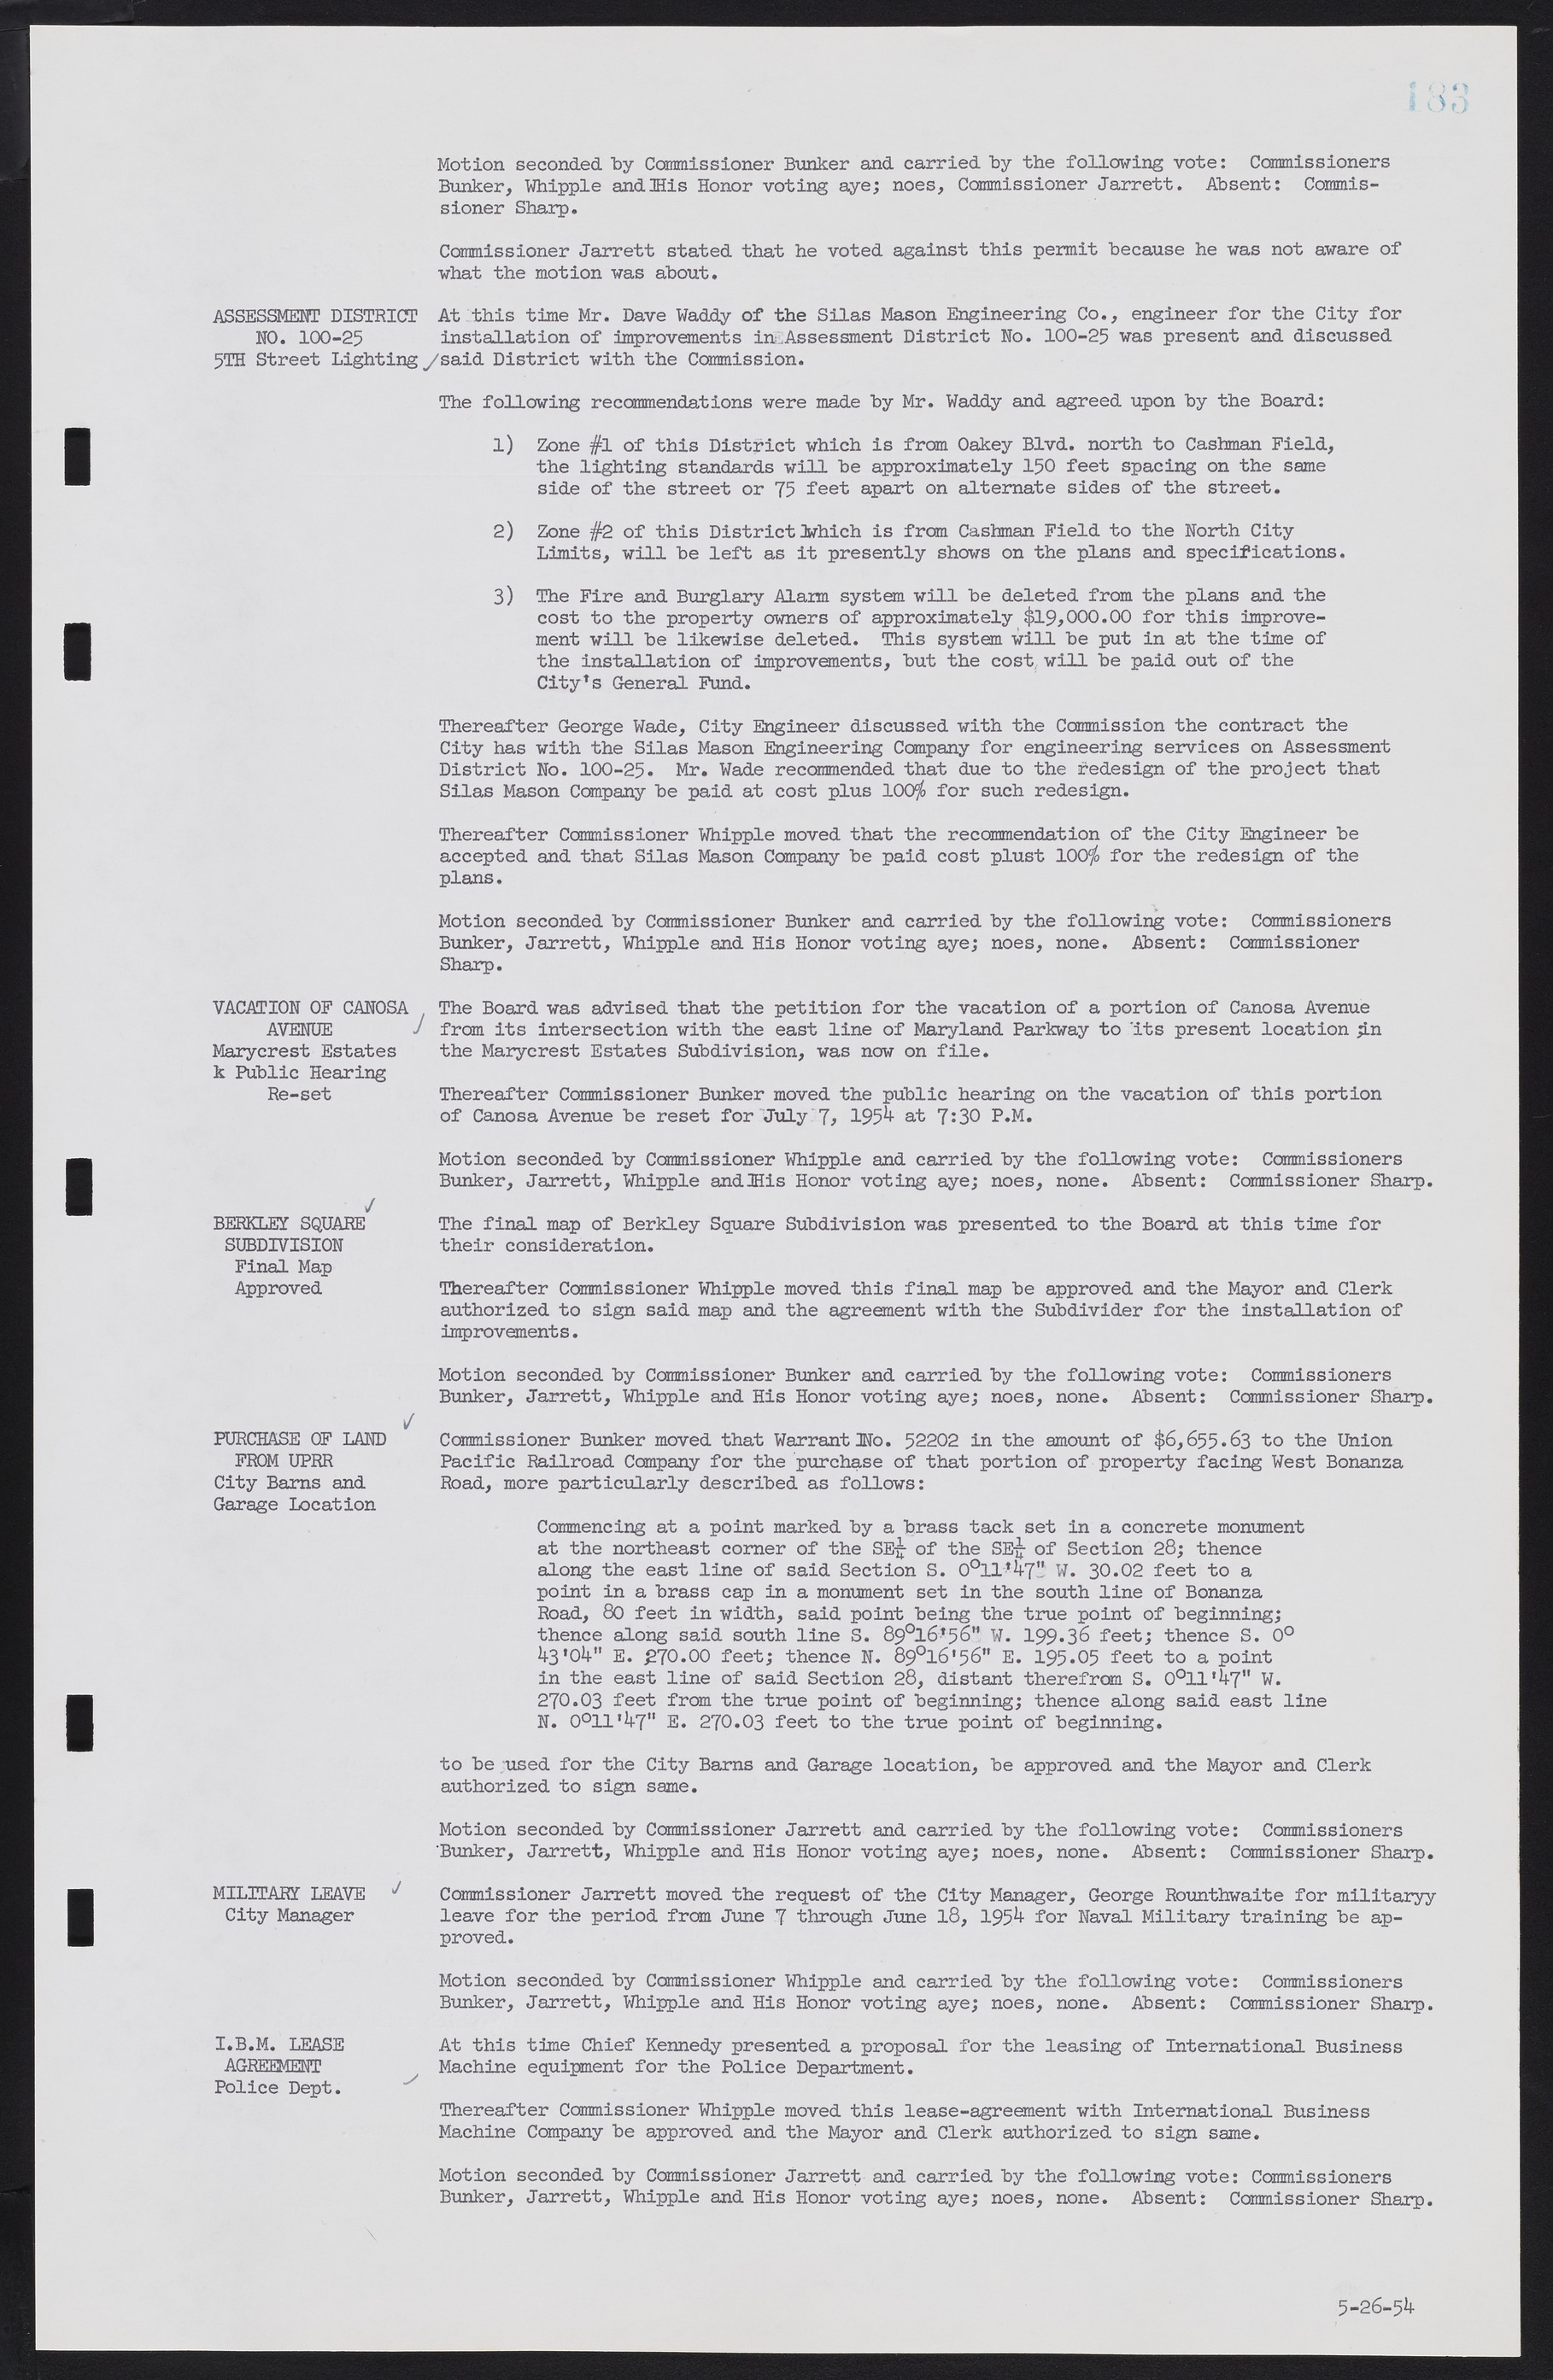 Las Vegas City Commission Minutes, February 17, 1954 to September 21, 1955, lvc000009-189